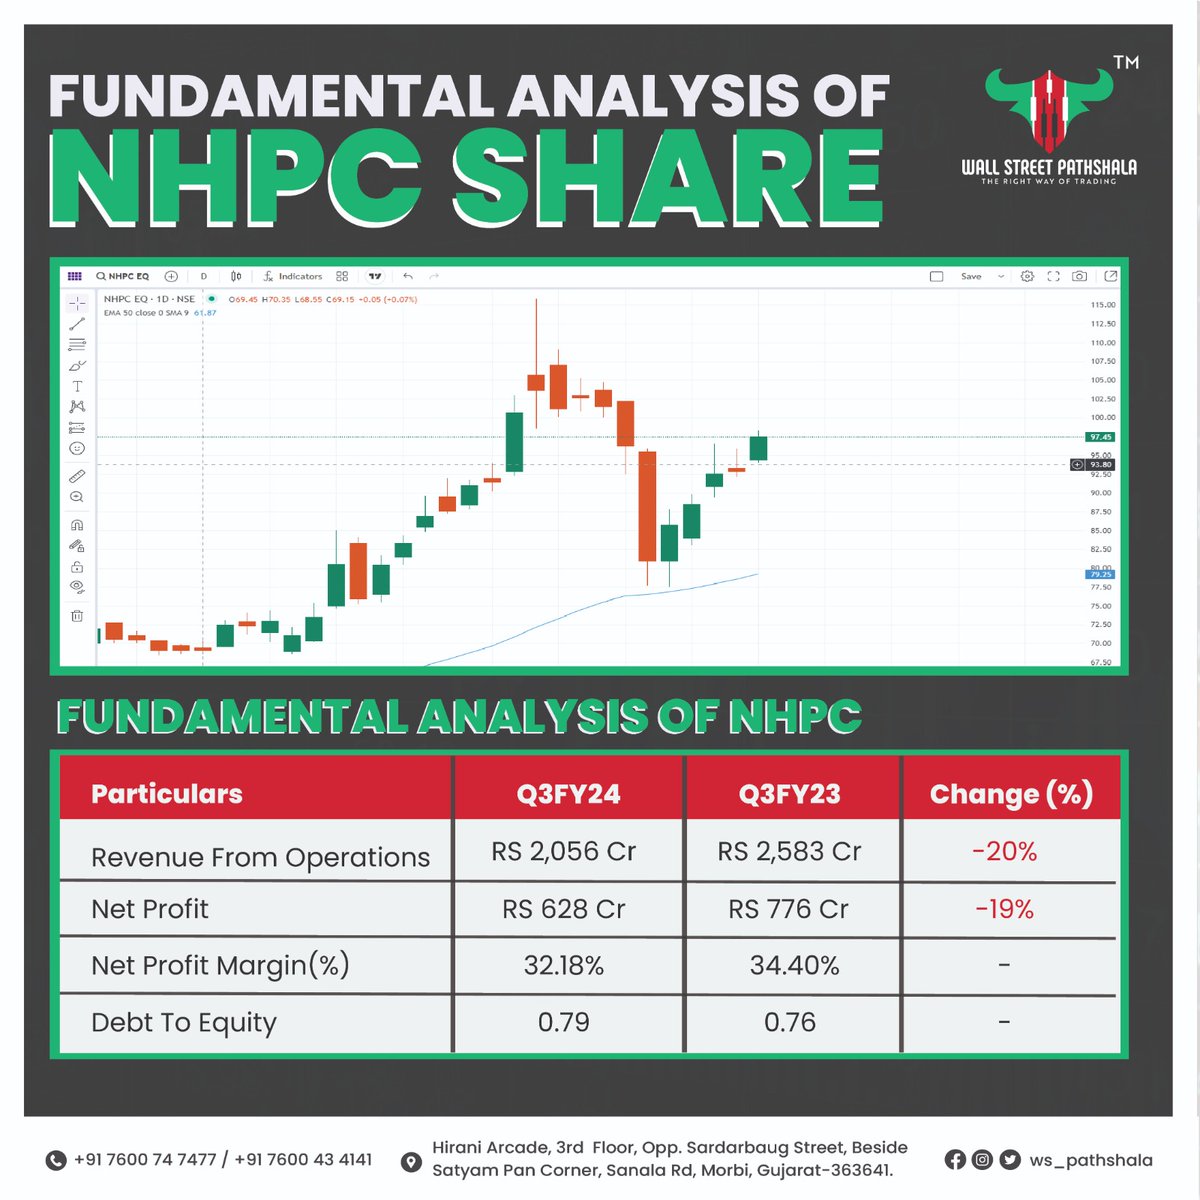 NHPC Share #fundamental Analysis

Follow On - Facebook | Instagram |Twitter | Youtube

#nhpc #analysis #nhpcshare #profit #revenue #q3fy24 #q3fy23 #equity #sharemarket #investing #nifty #sensex #trading #stockmarket #wallstreetpathshala #wsp #today #morbi #bharat